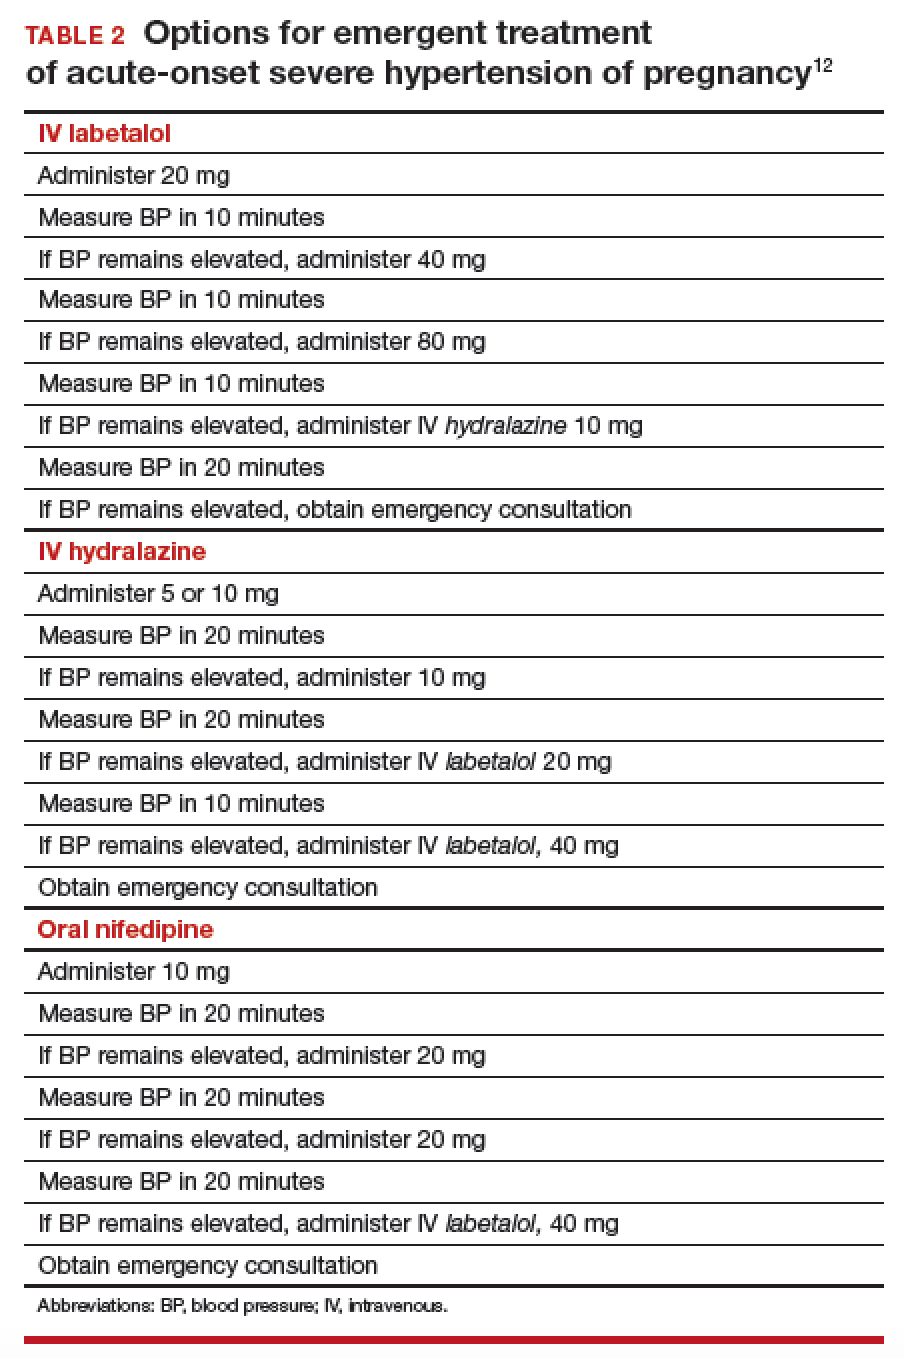 Hydralazine vs labetalol for the treatment of severe hypertensive